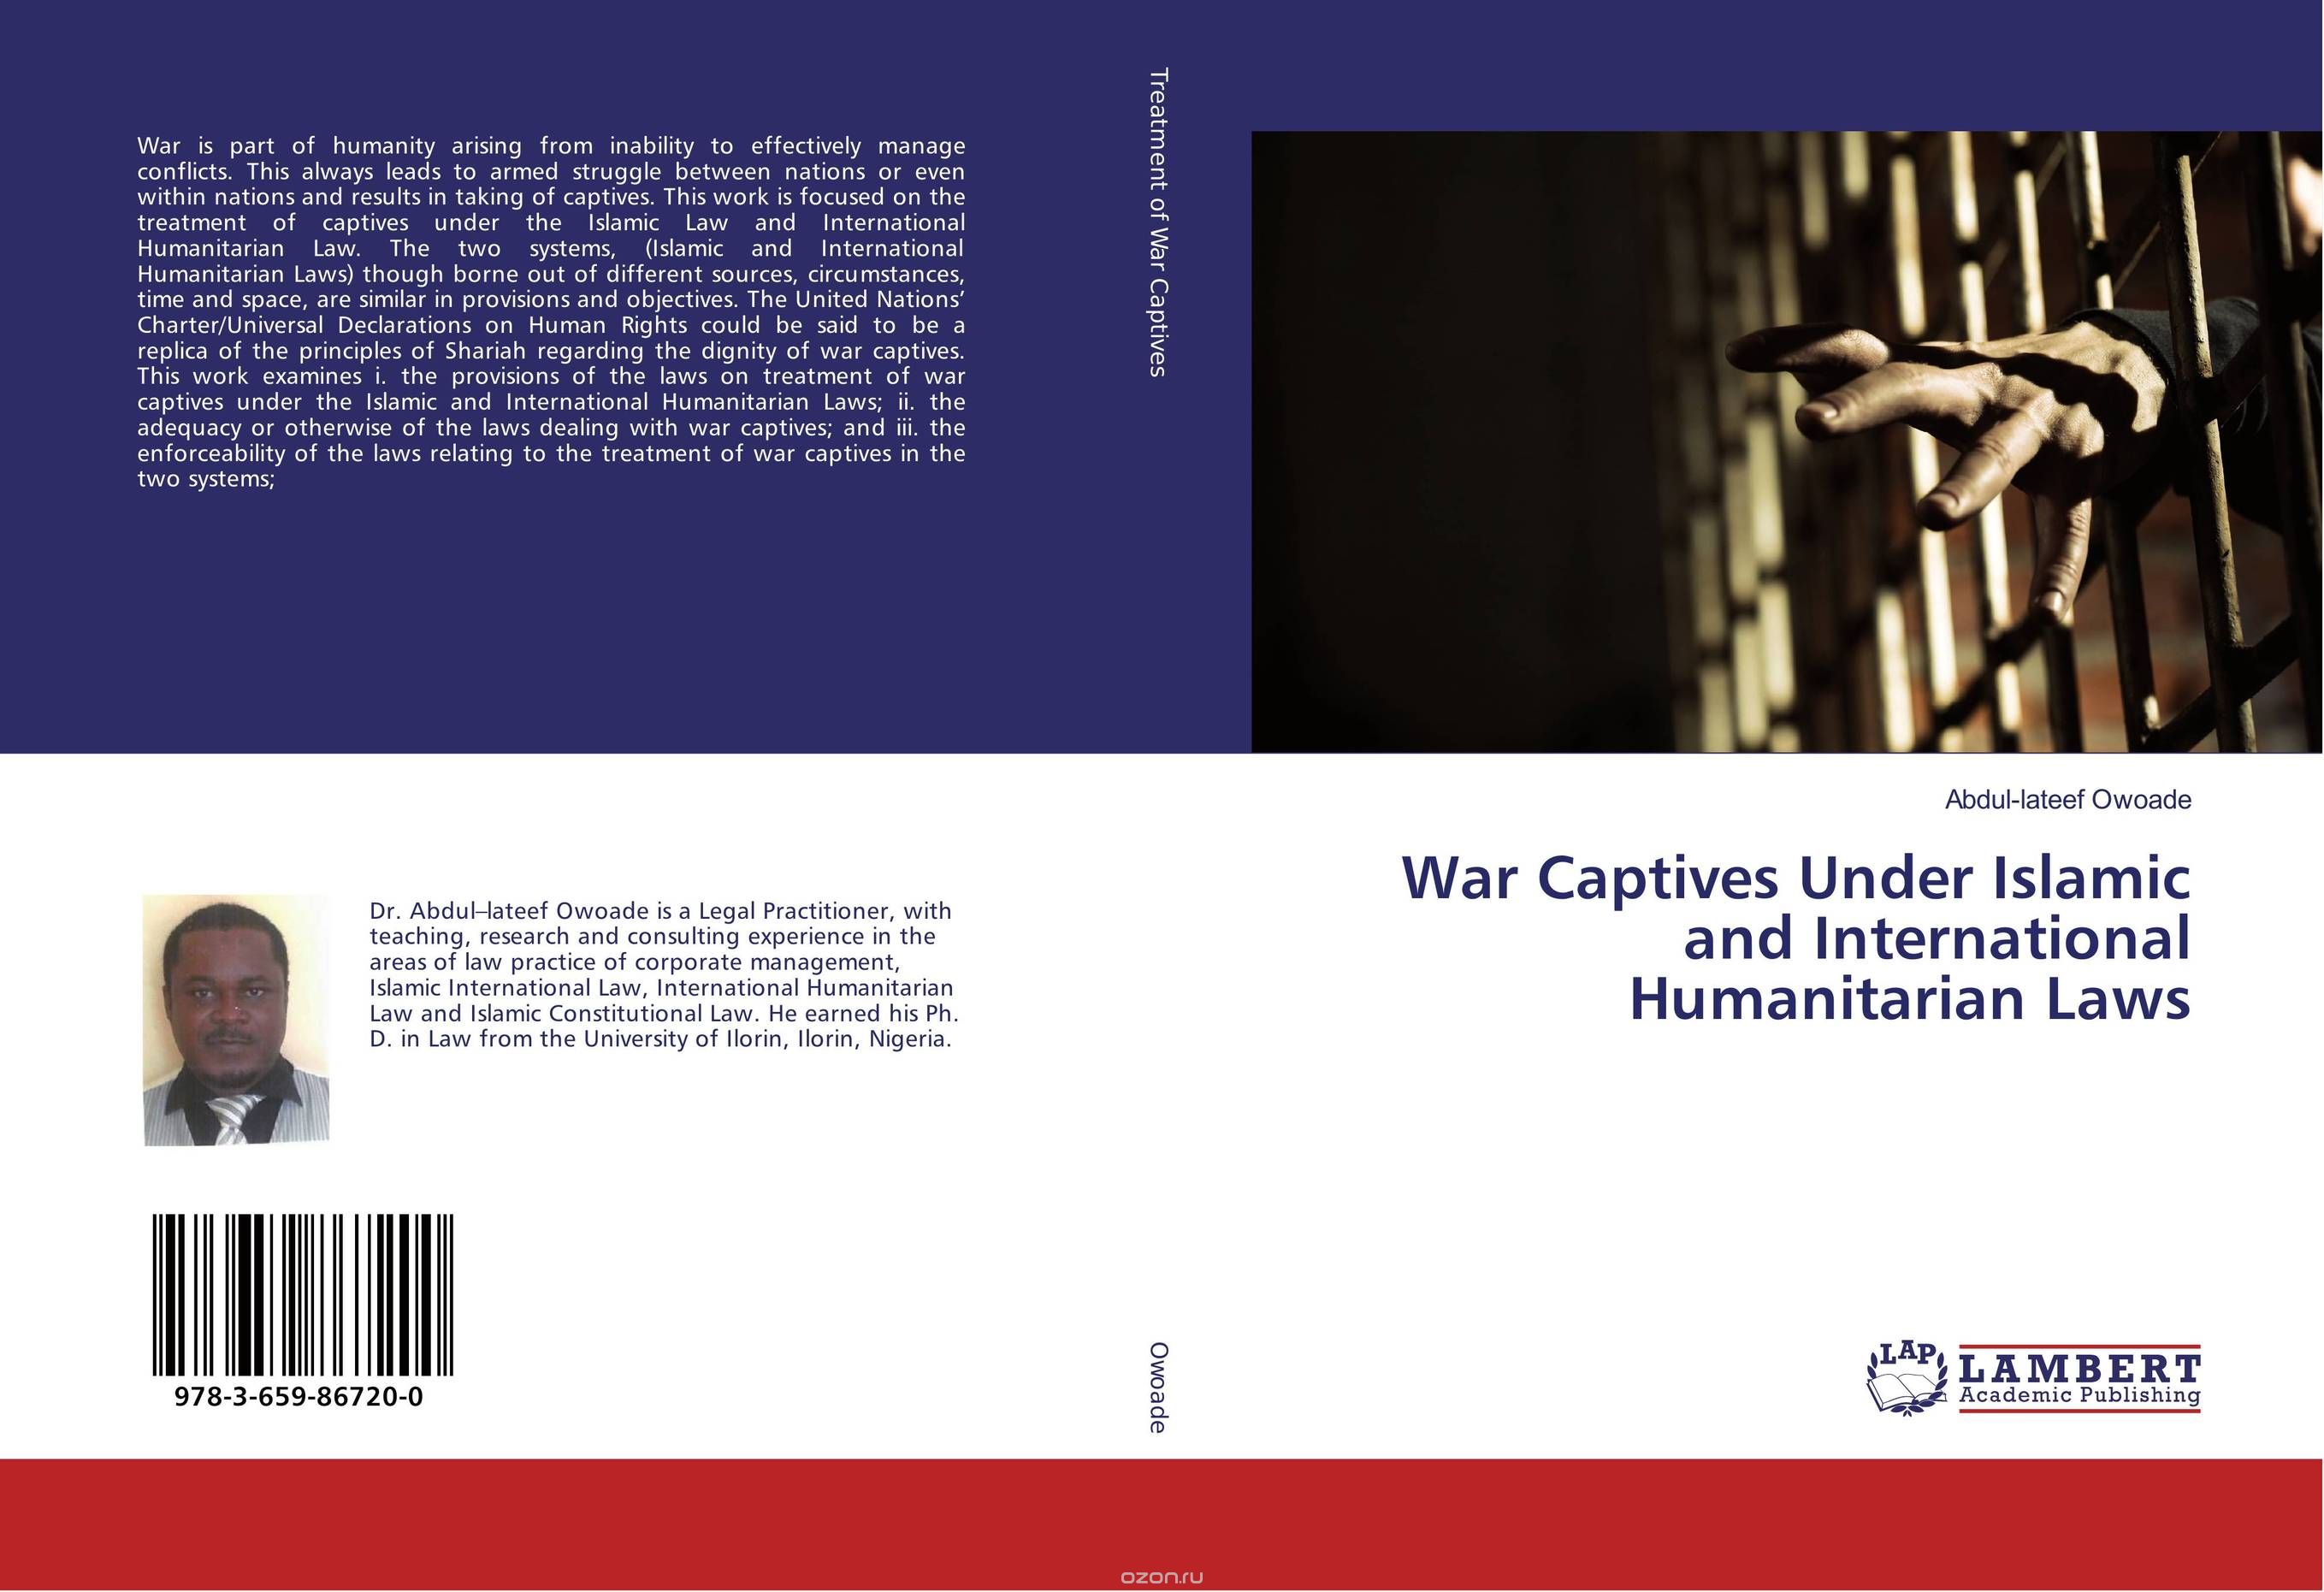 Скачать книгу "War Captives Under Islamic and International Humanitarian Laws"